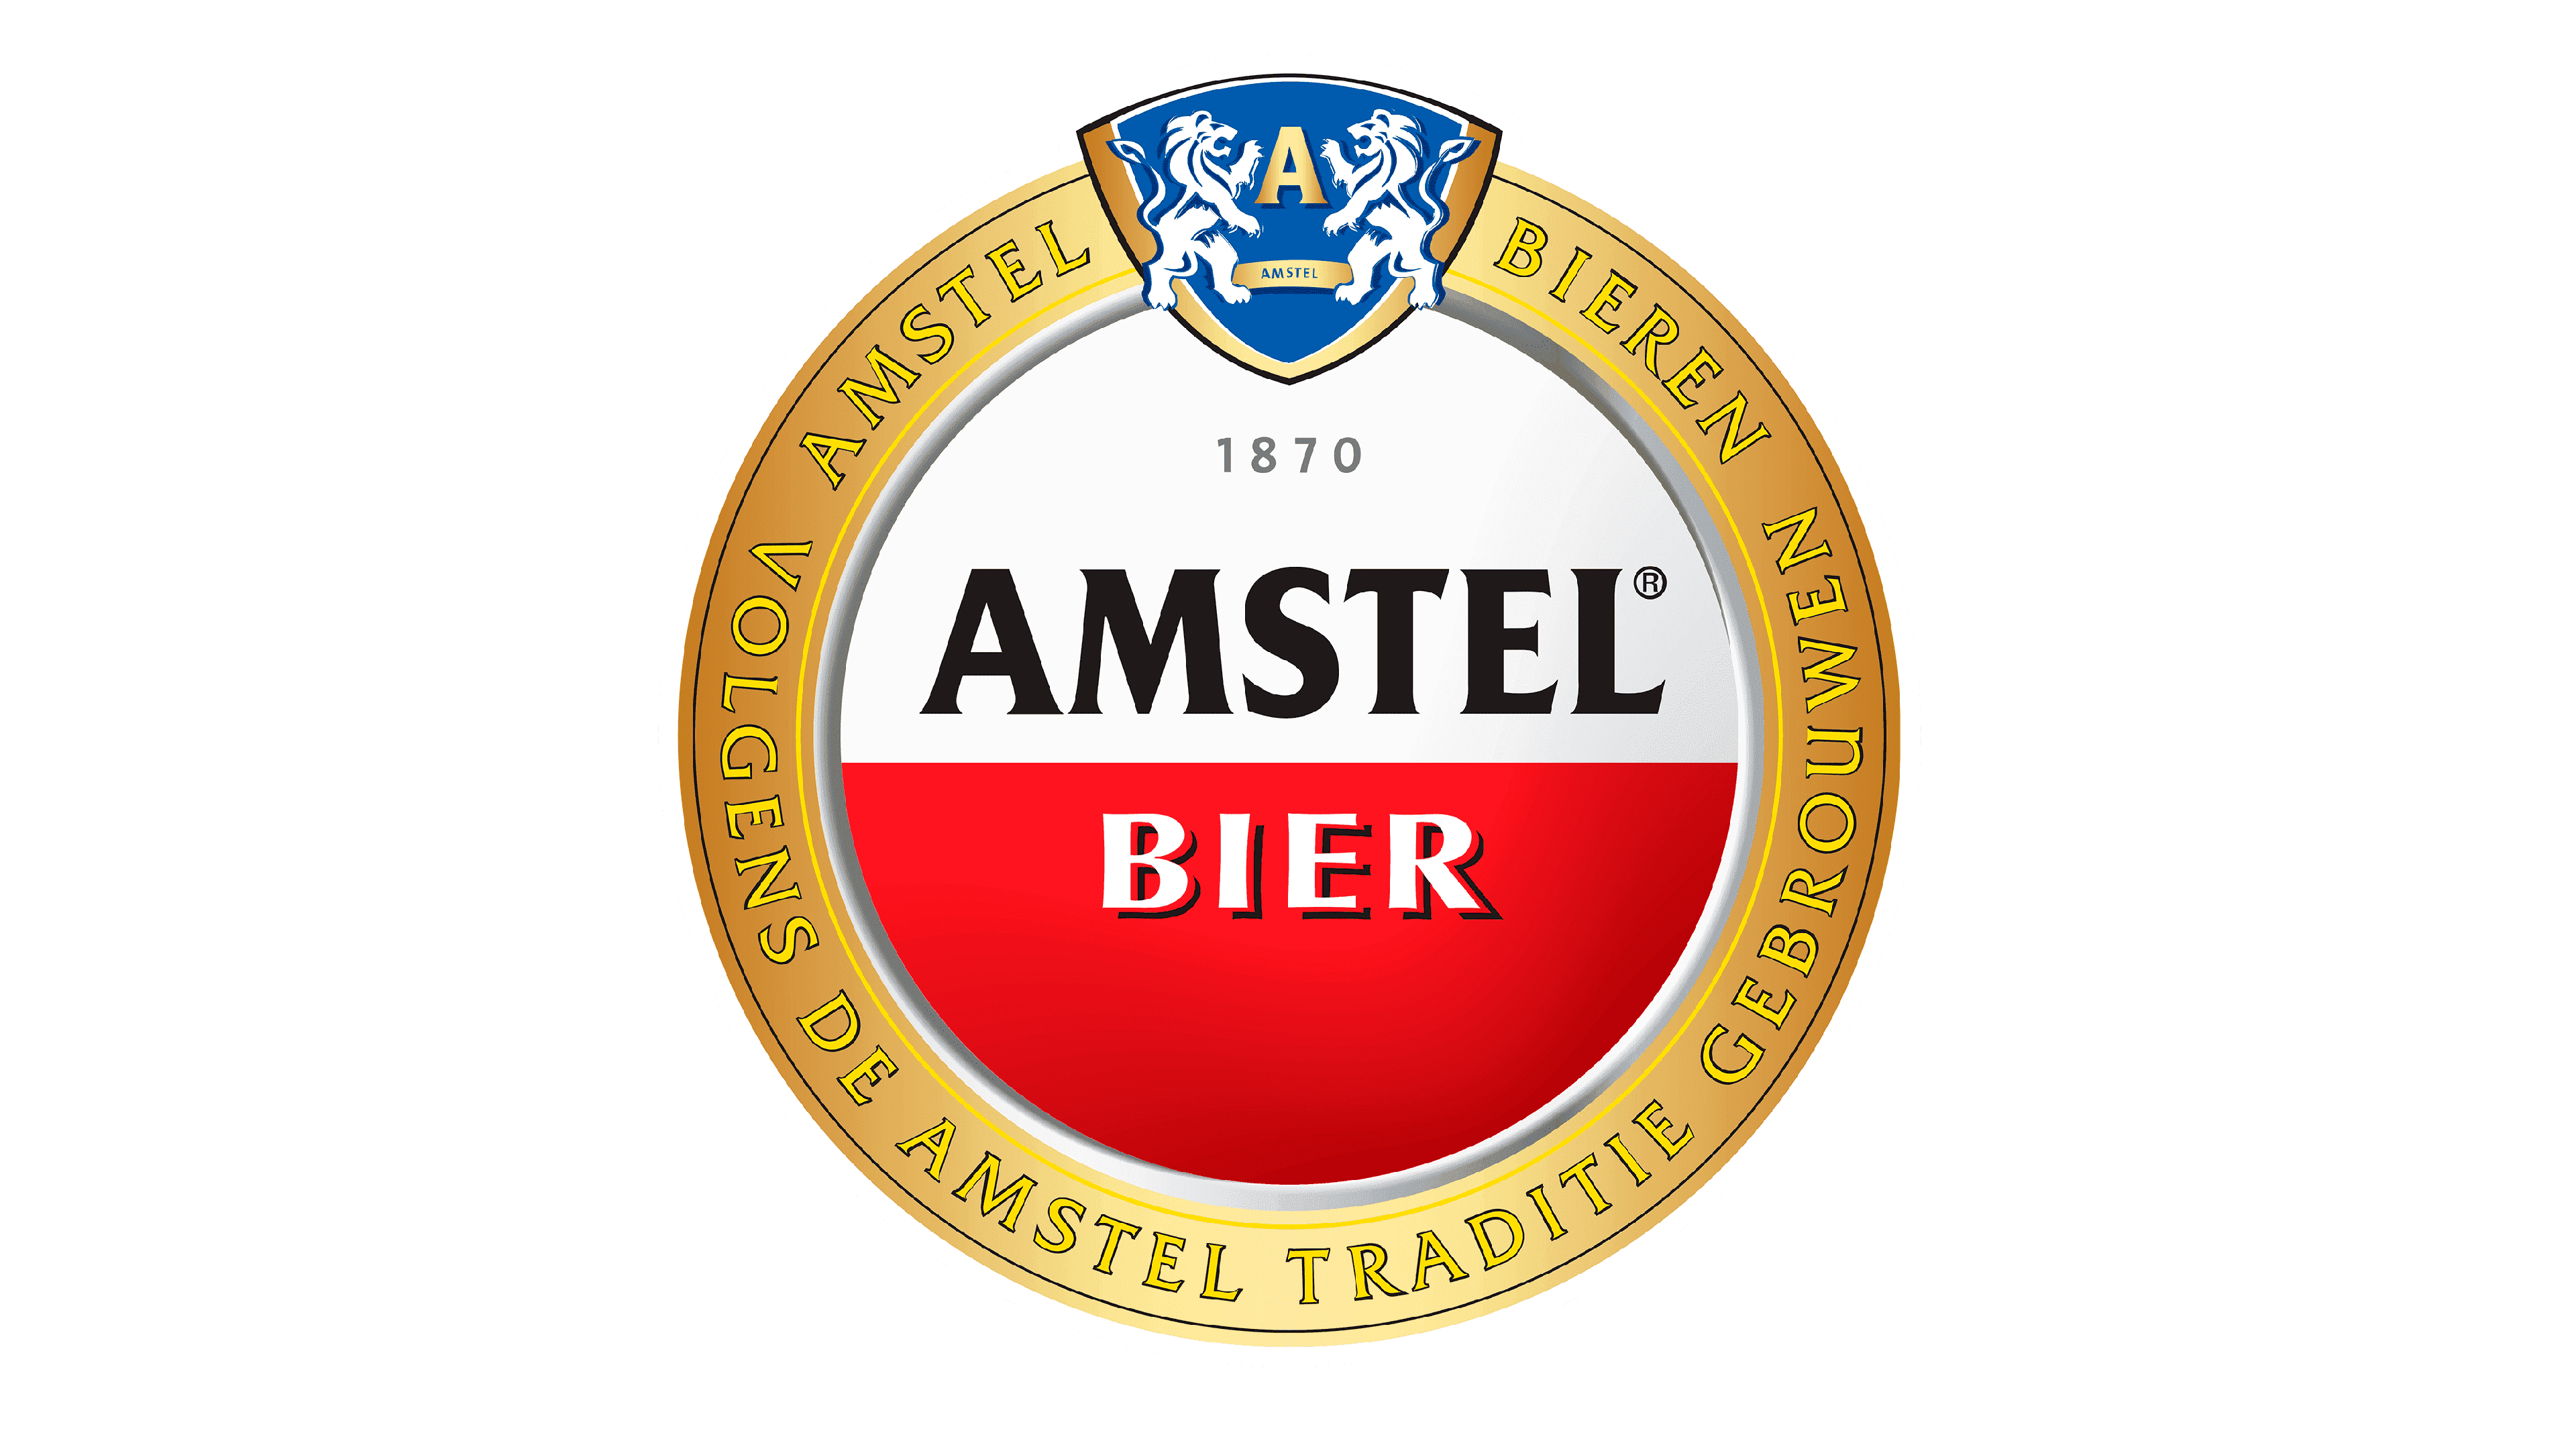 Brand Bier, Brands of the World™